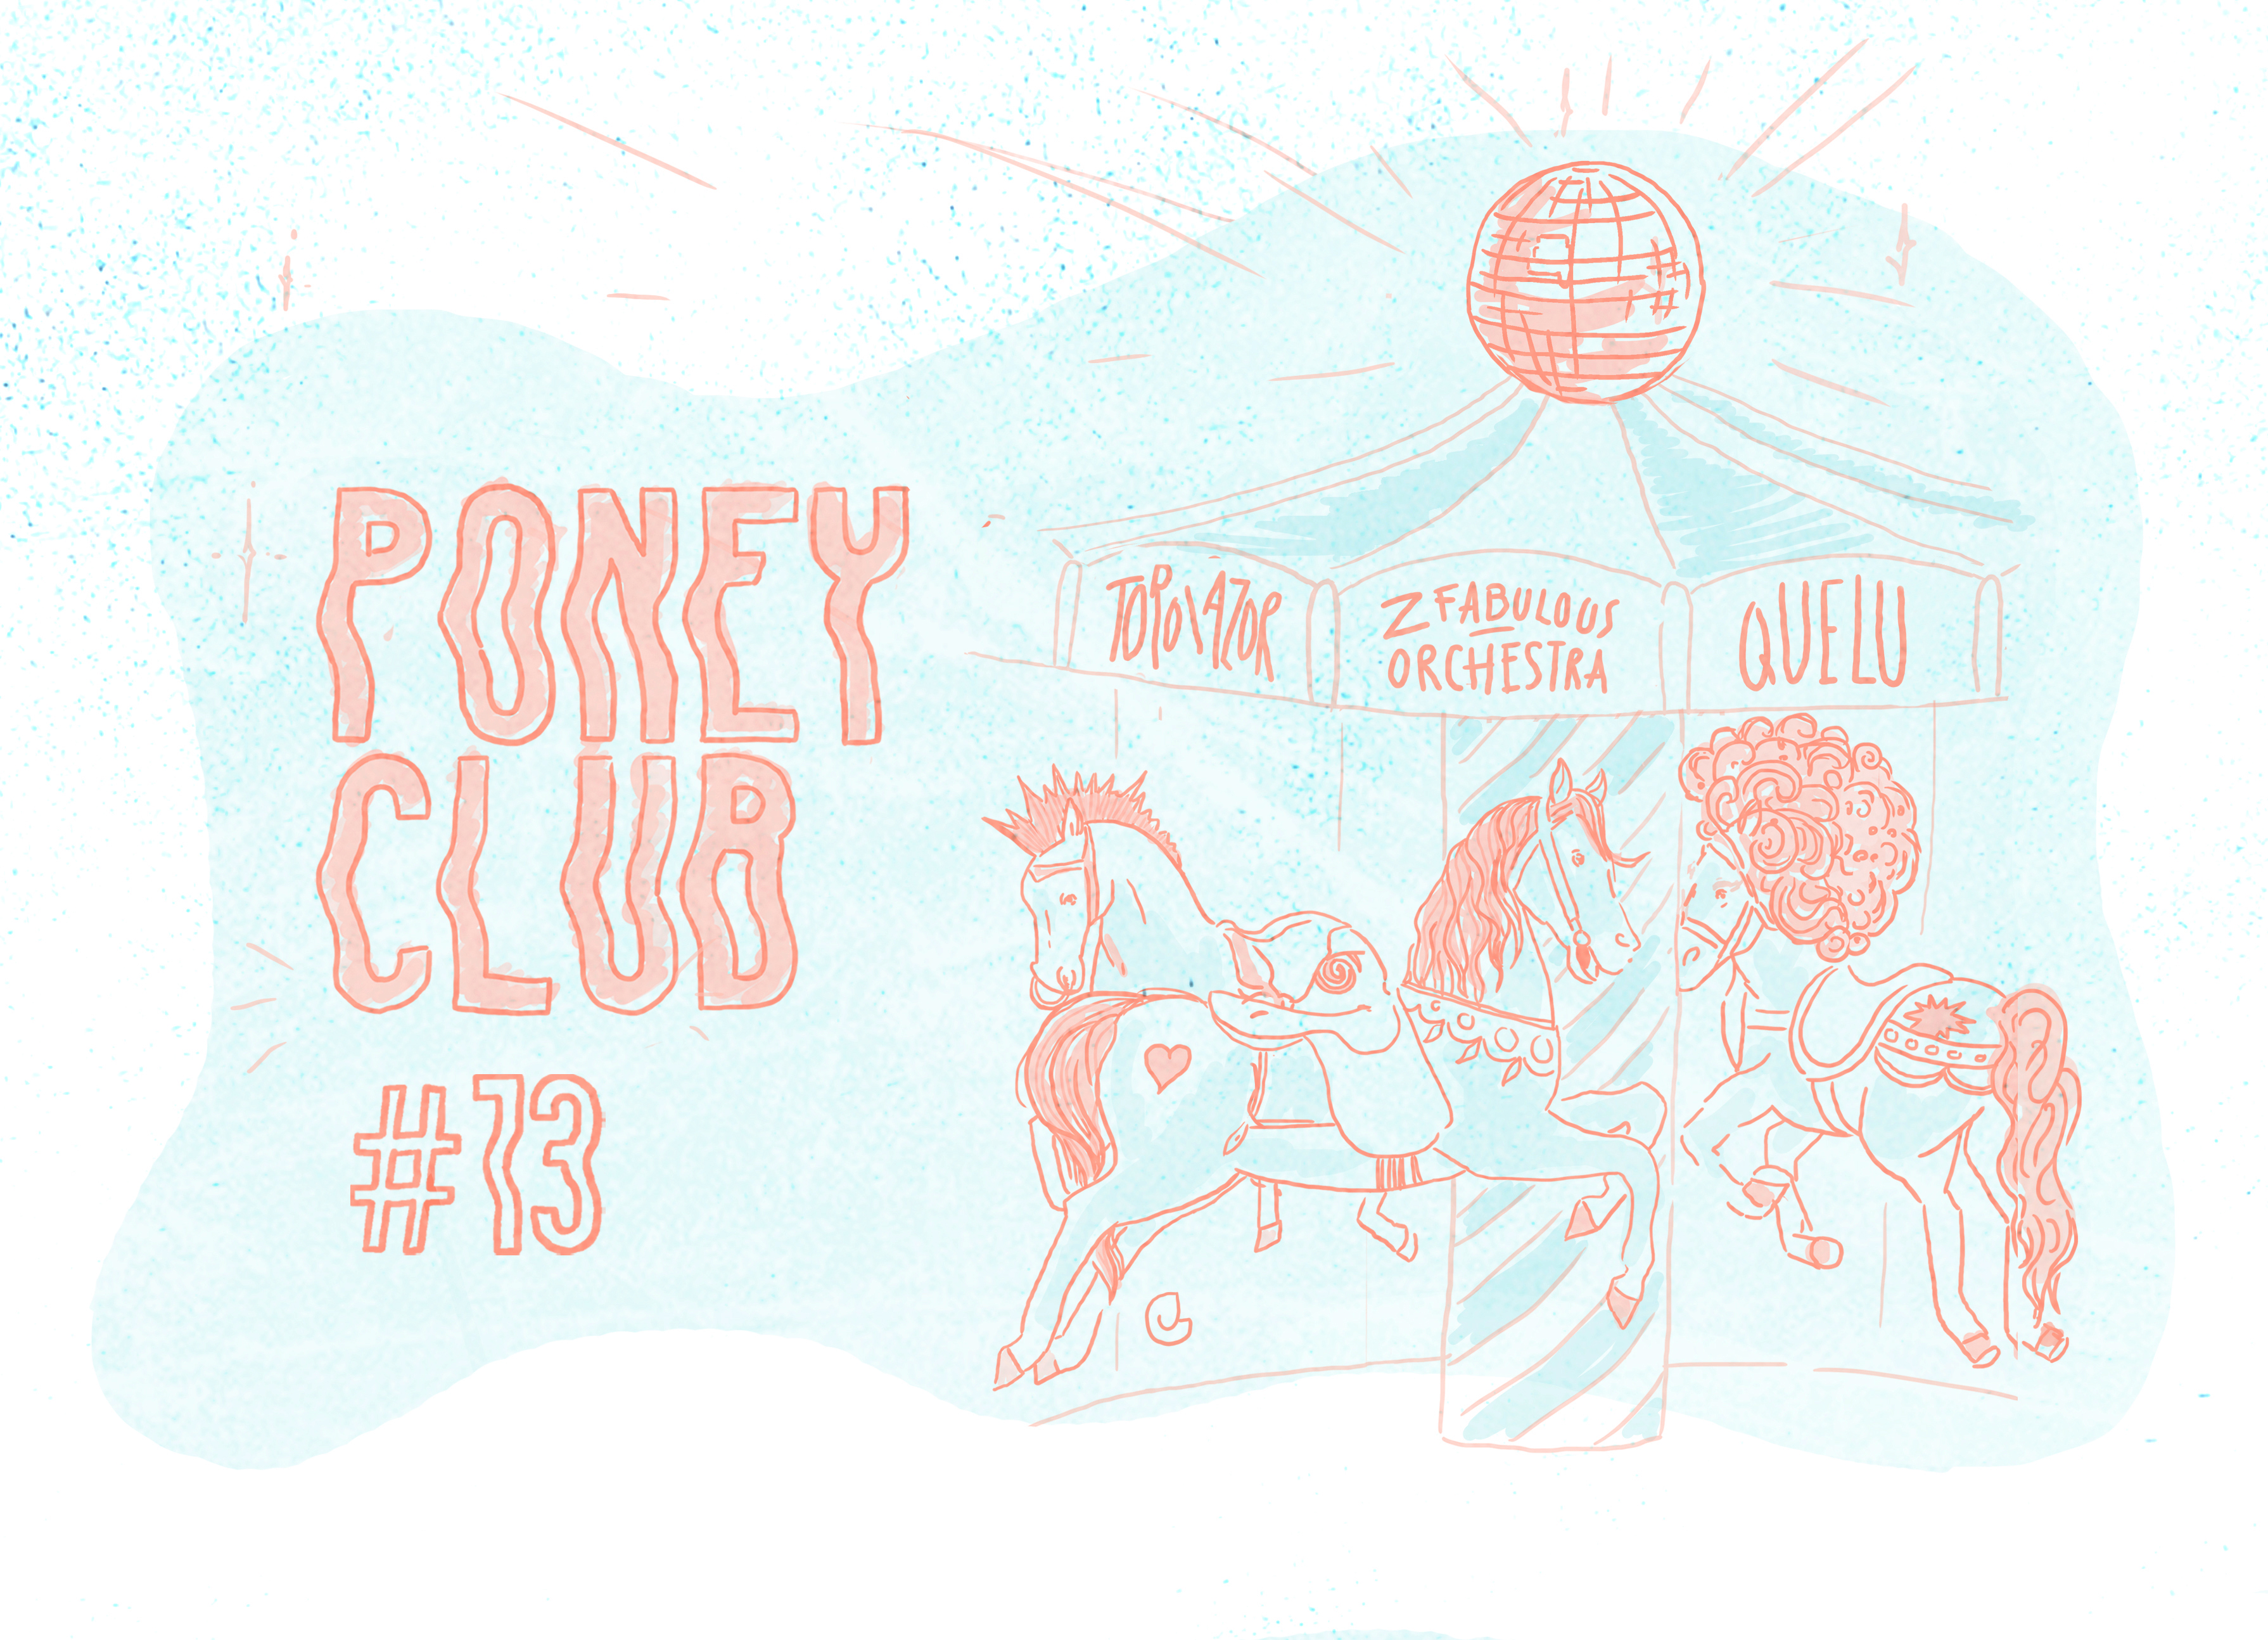 Poney Club #13